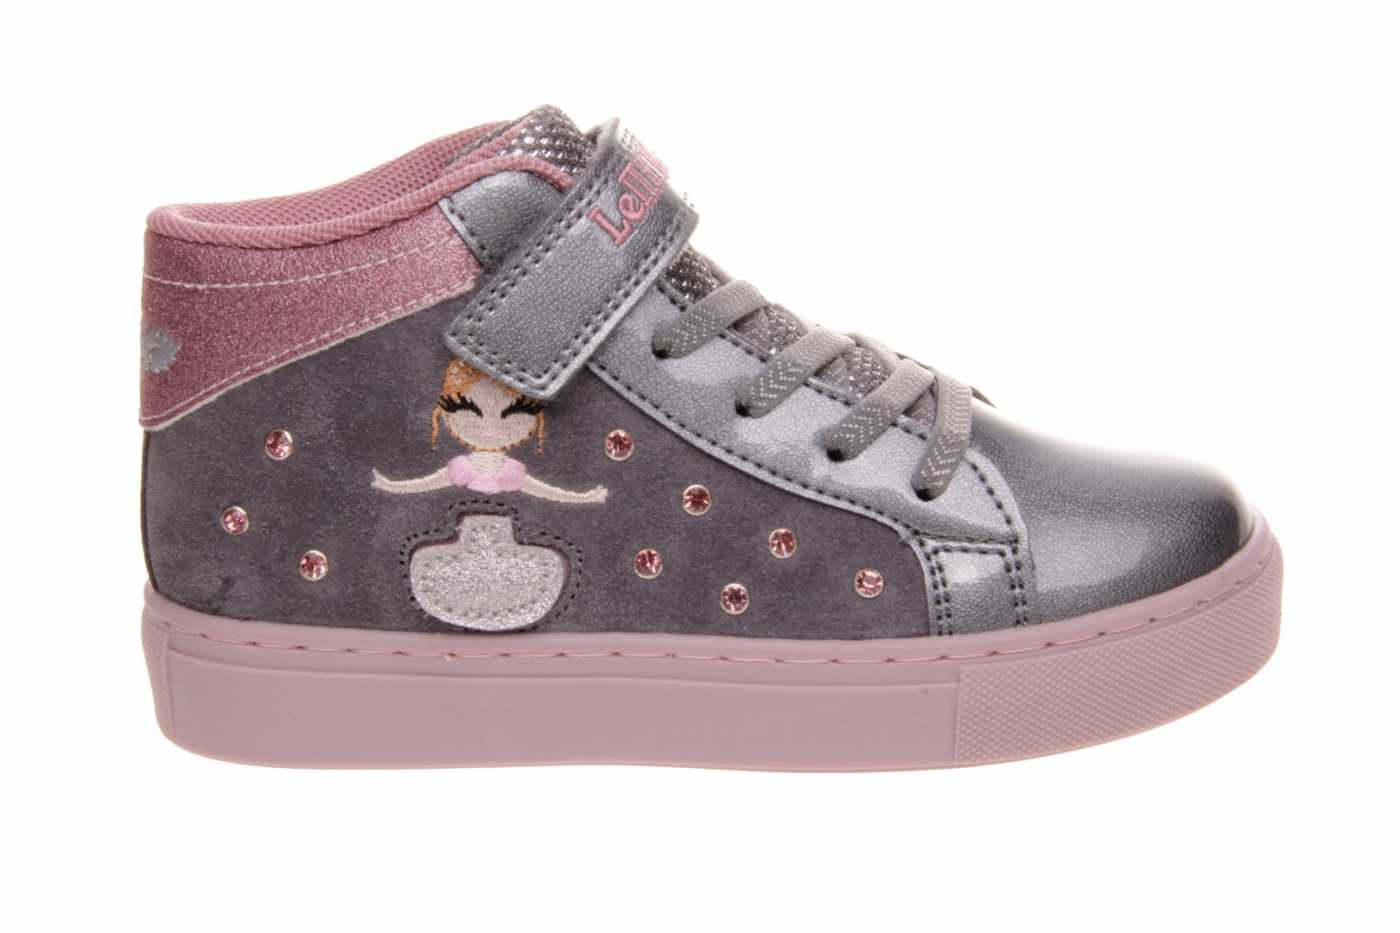 zapato LELLI KELLY para JOVEN NIÑA estilo BOTINES-BOTA ALTA color GRIS PIEL